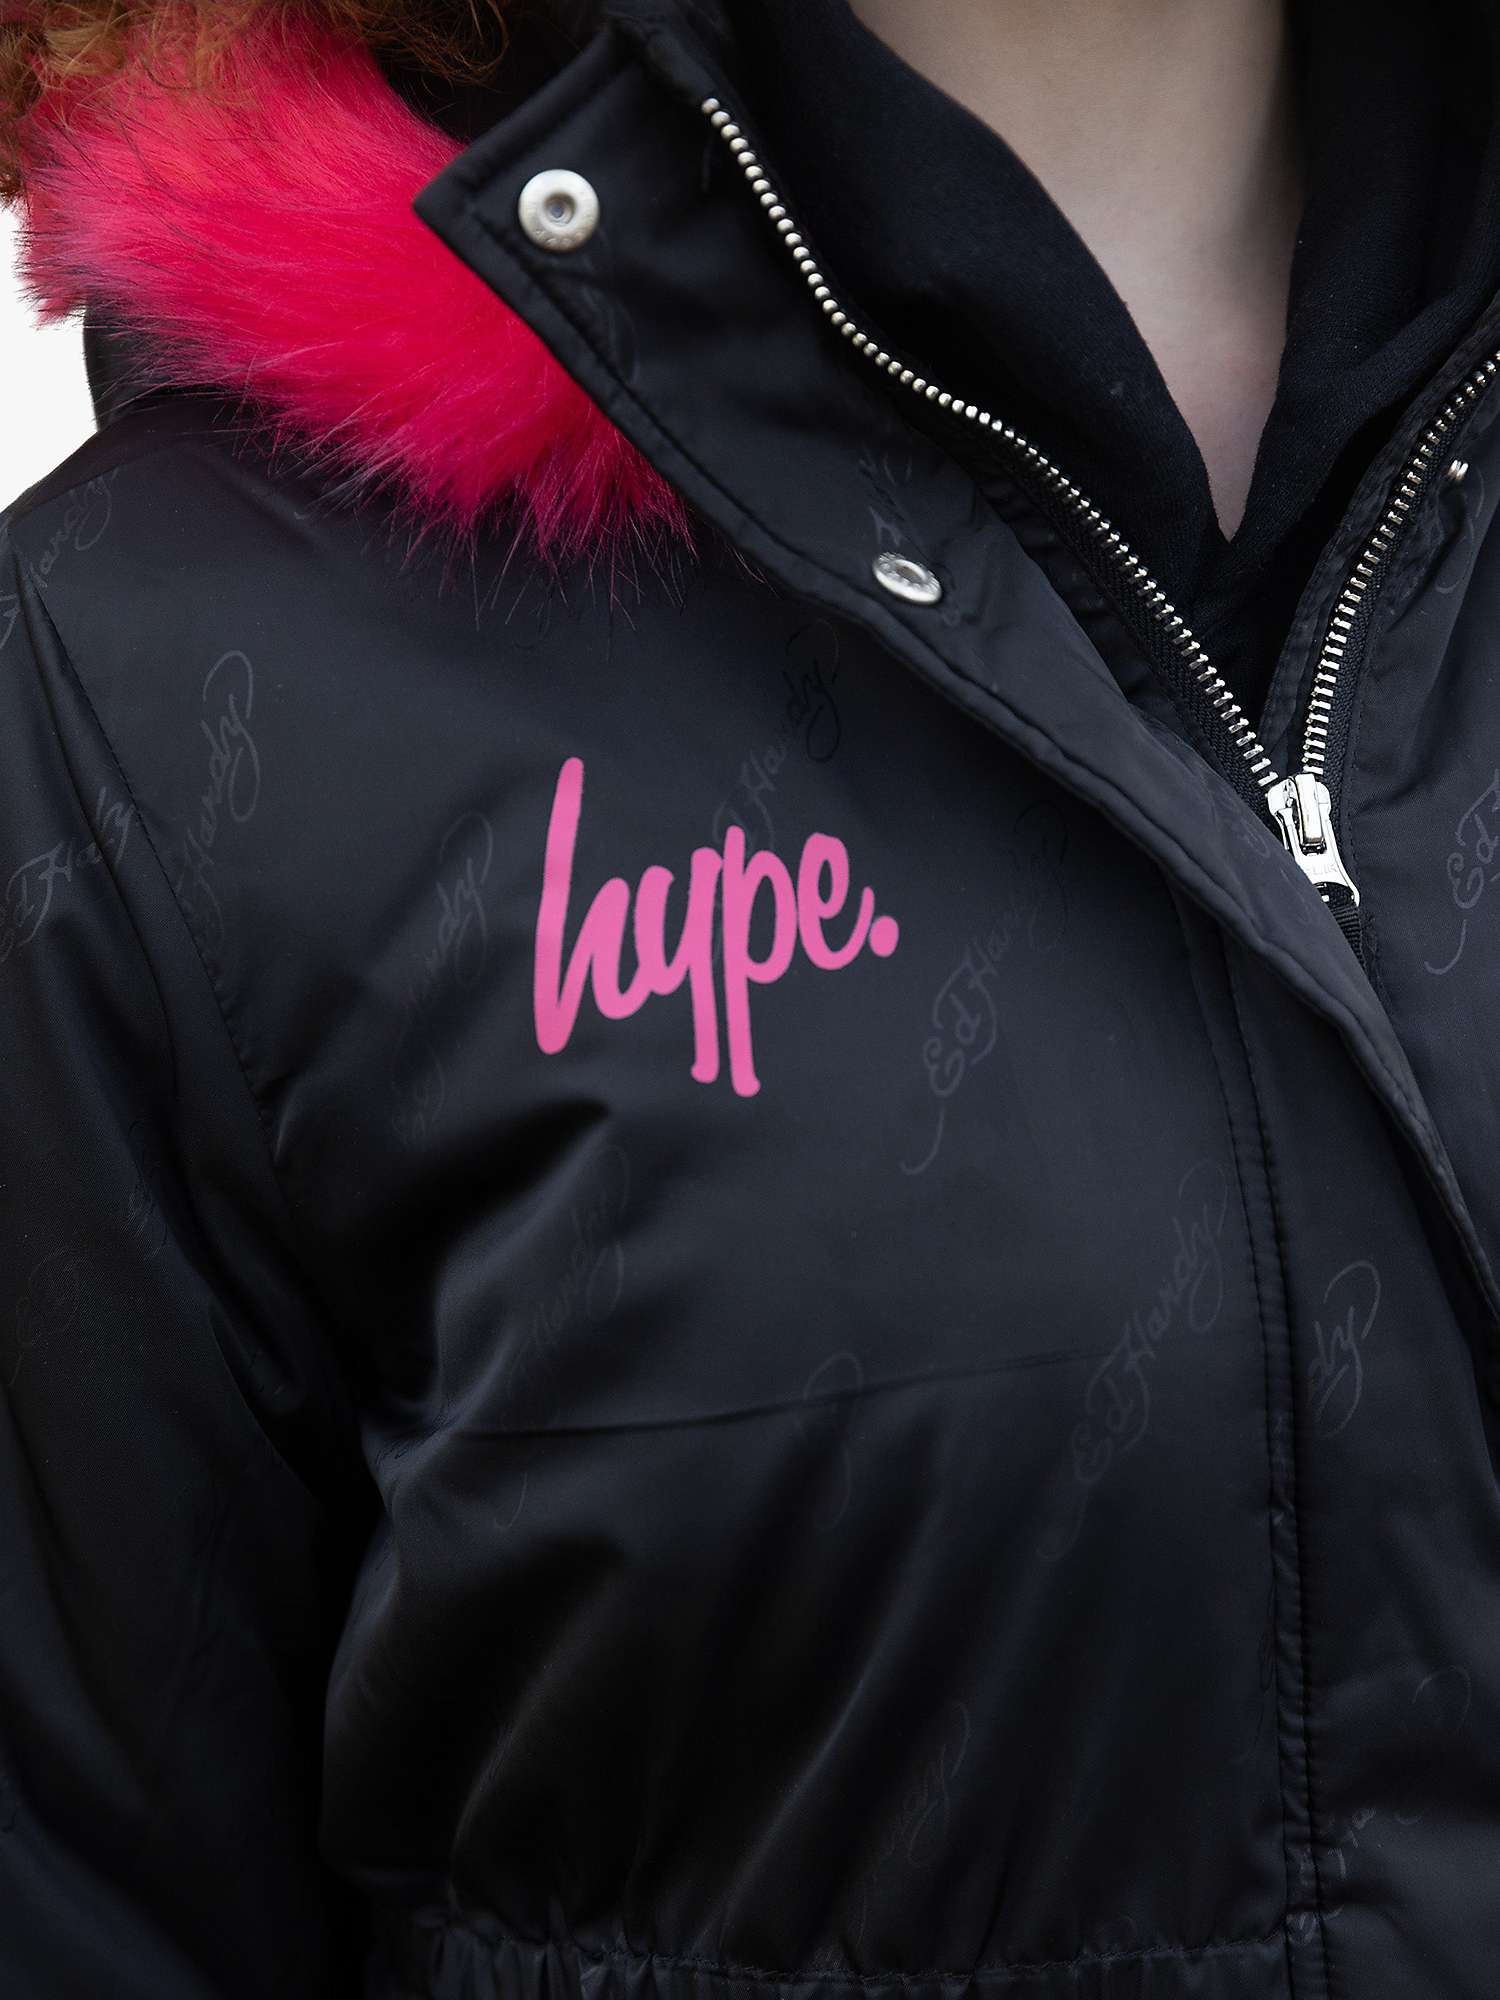 Buy Hype Kids' HYPE. x Ed Hardy Jaquard Parka Jacket, Black Online at johnlewis.com